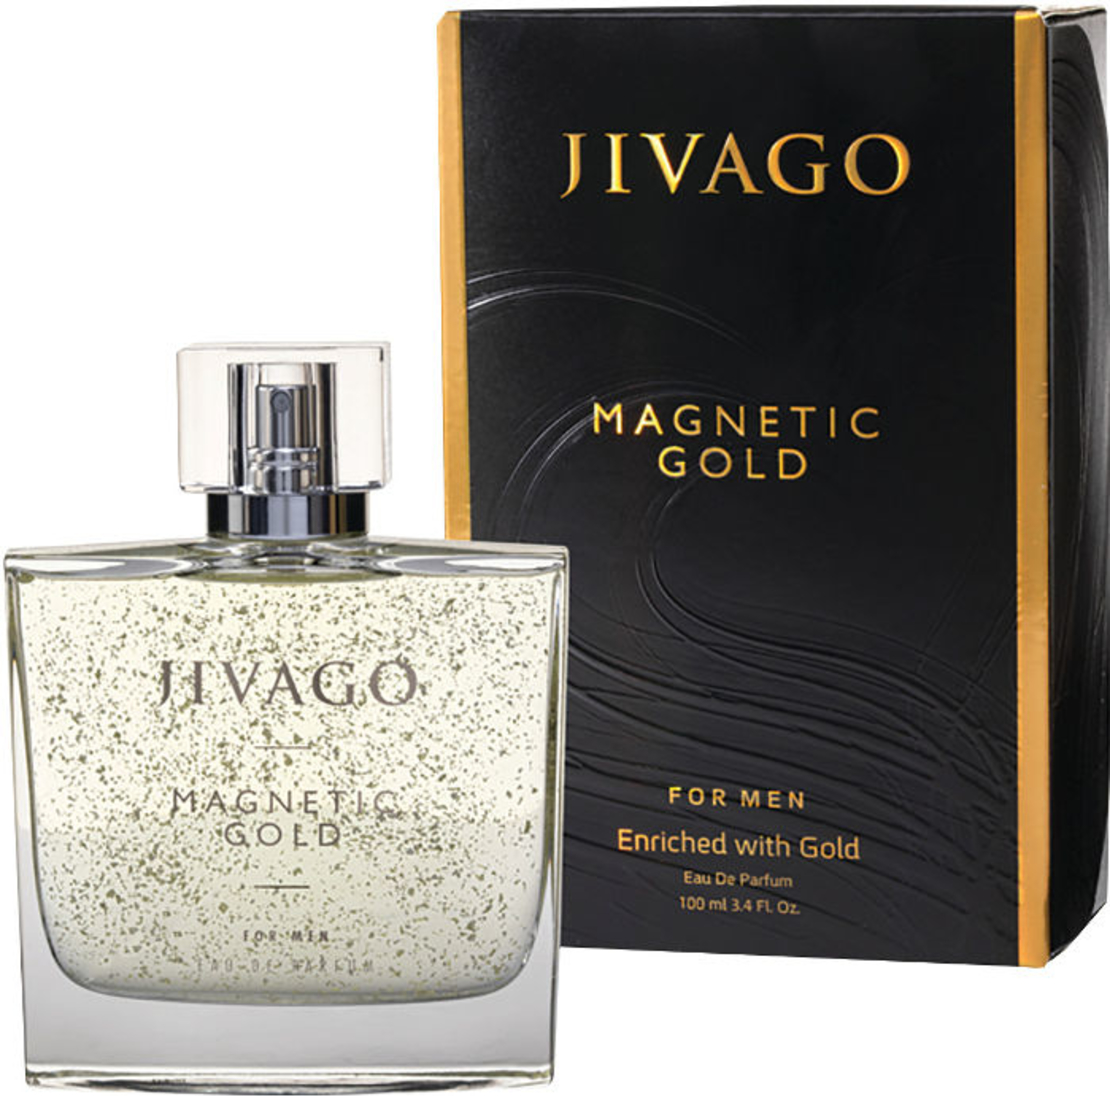 jivago magnetic gold